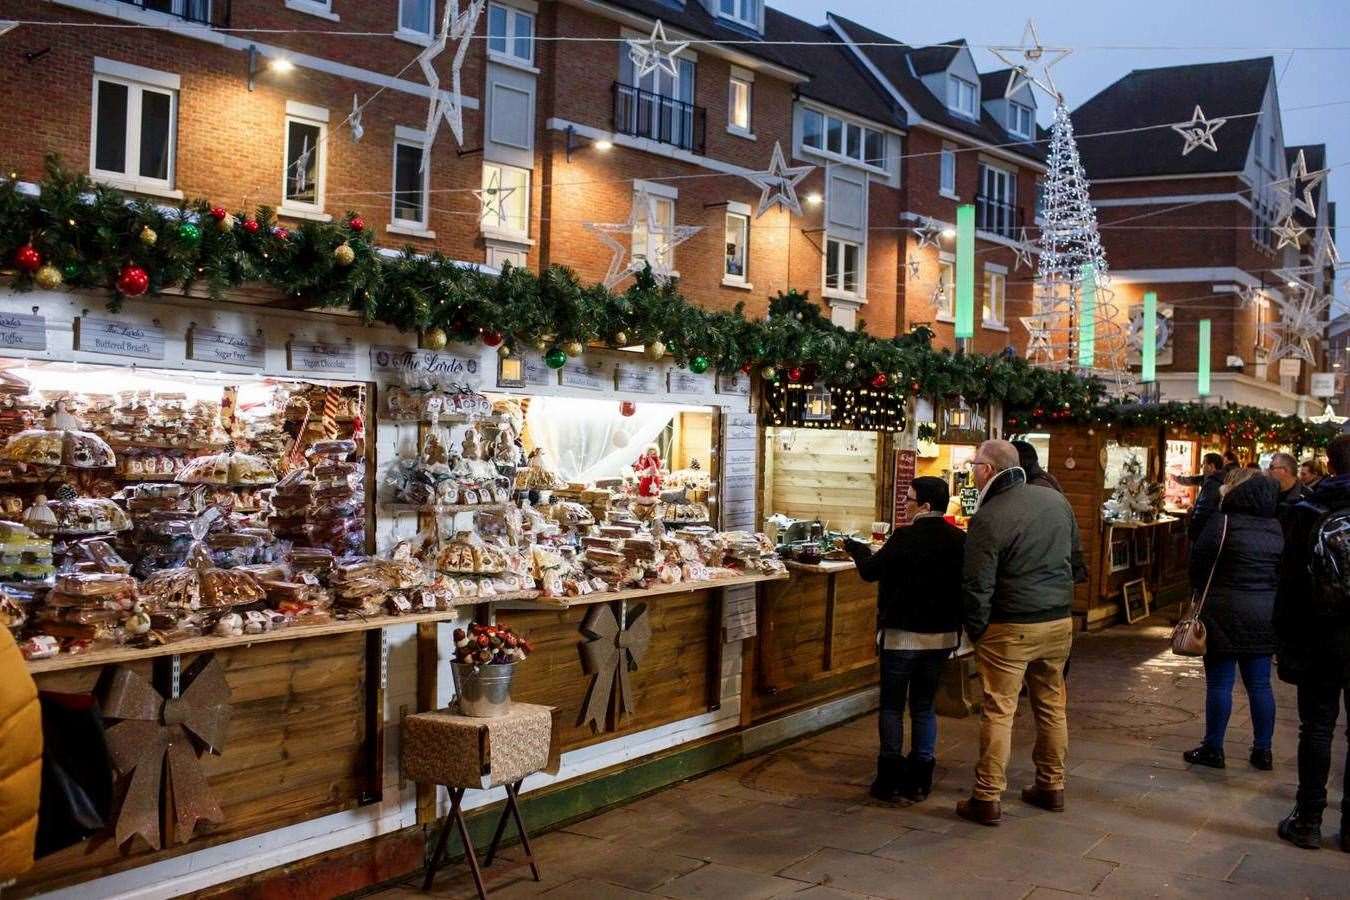 The Canterbury Christmas Market last year. Picture: Canterbury Christmas Market